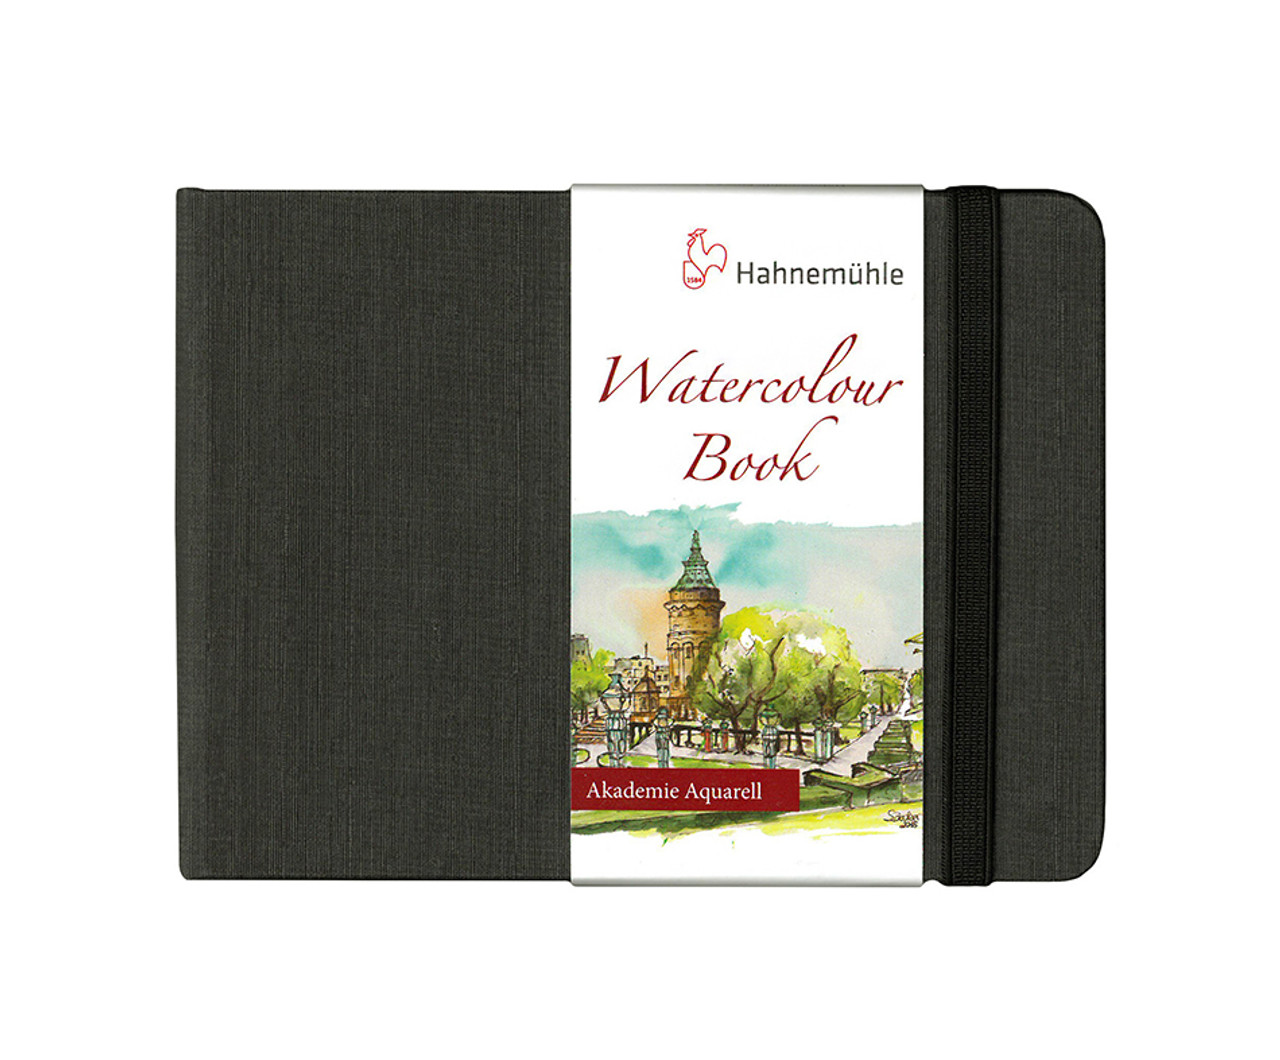 Hahnemuhle Watercolor Book A6 Landscape